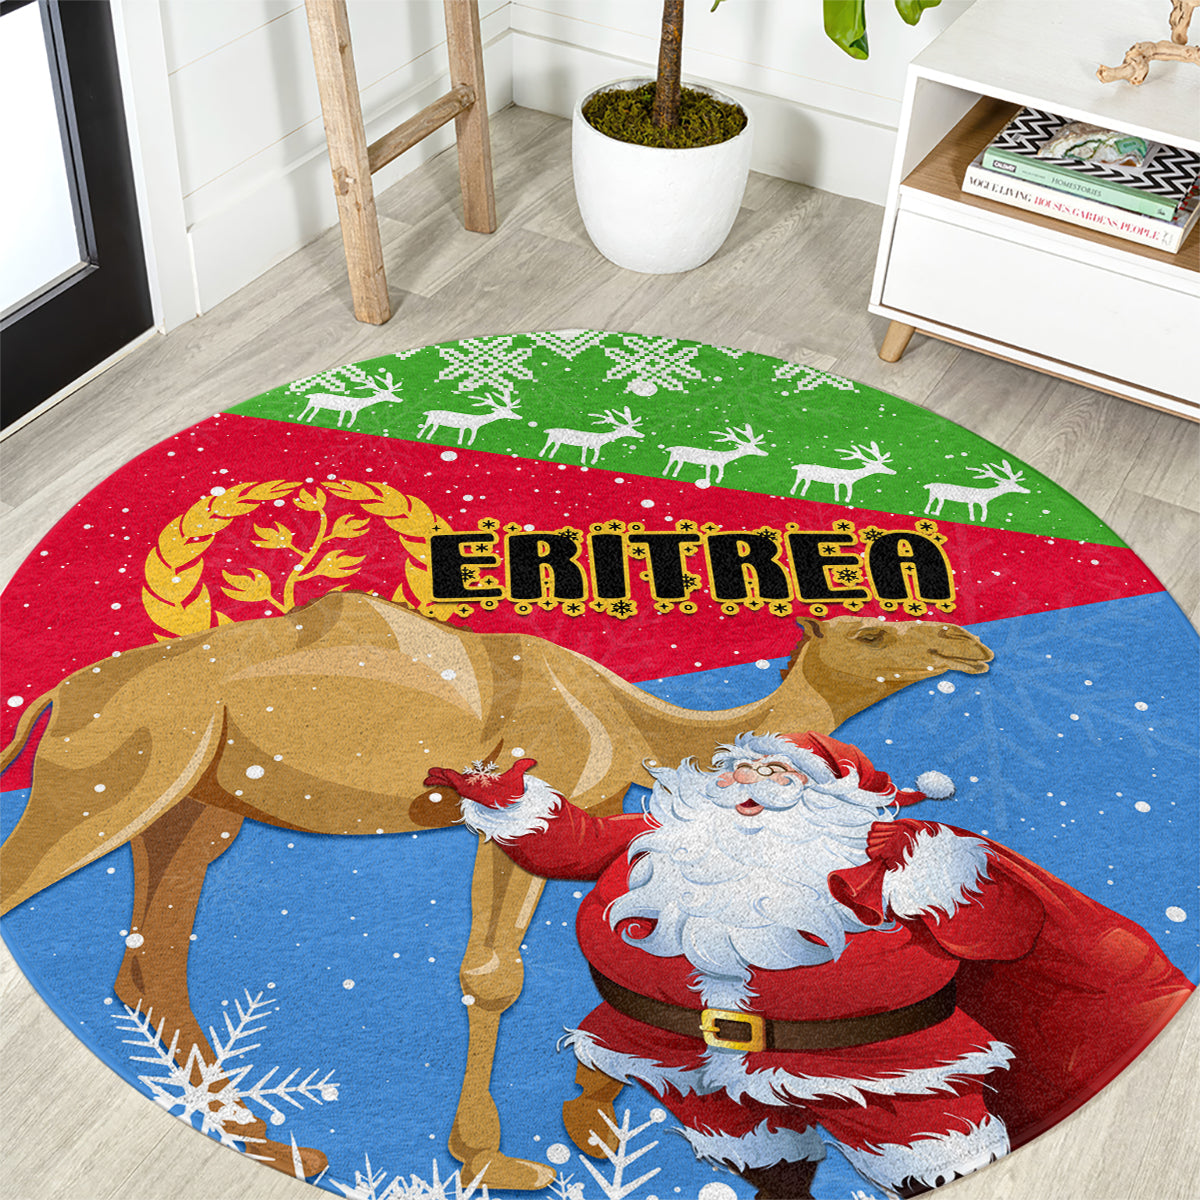 custom-eritrea-christmas-round-carpet-santa-claus-with-dromedary-camel